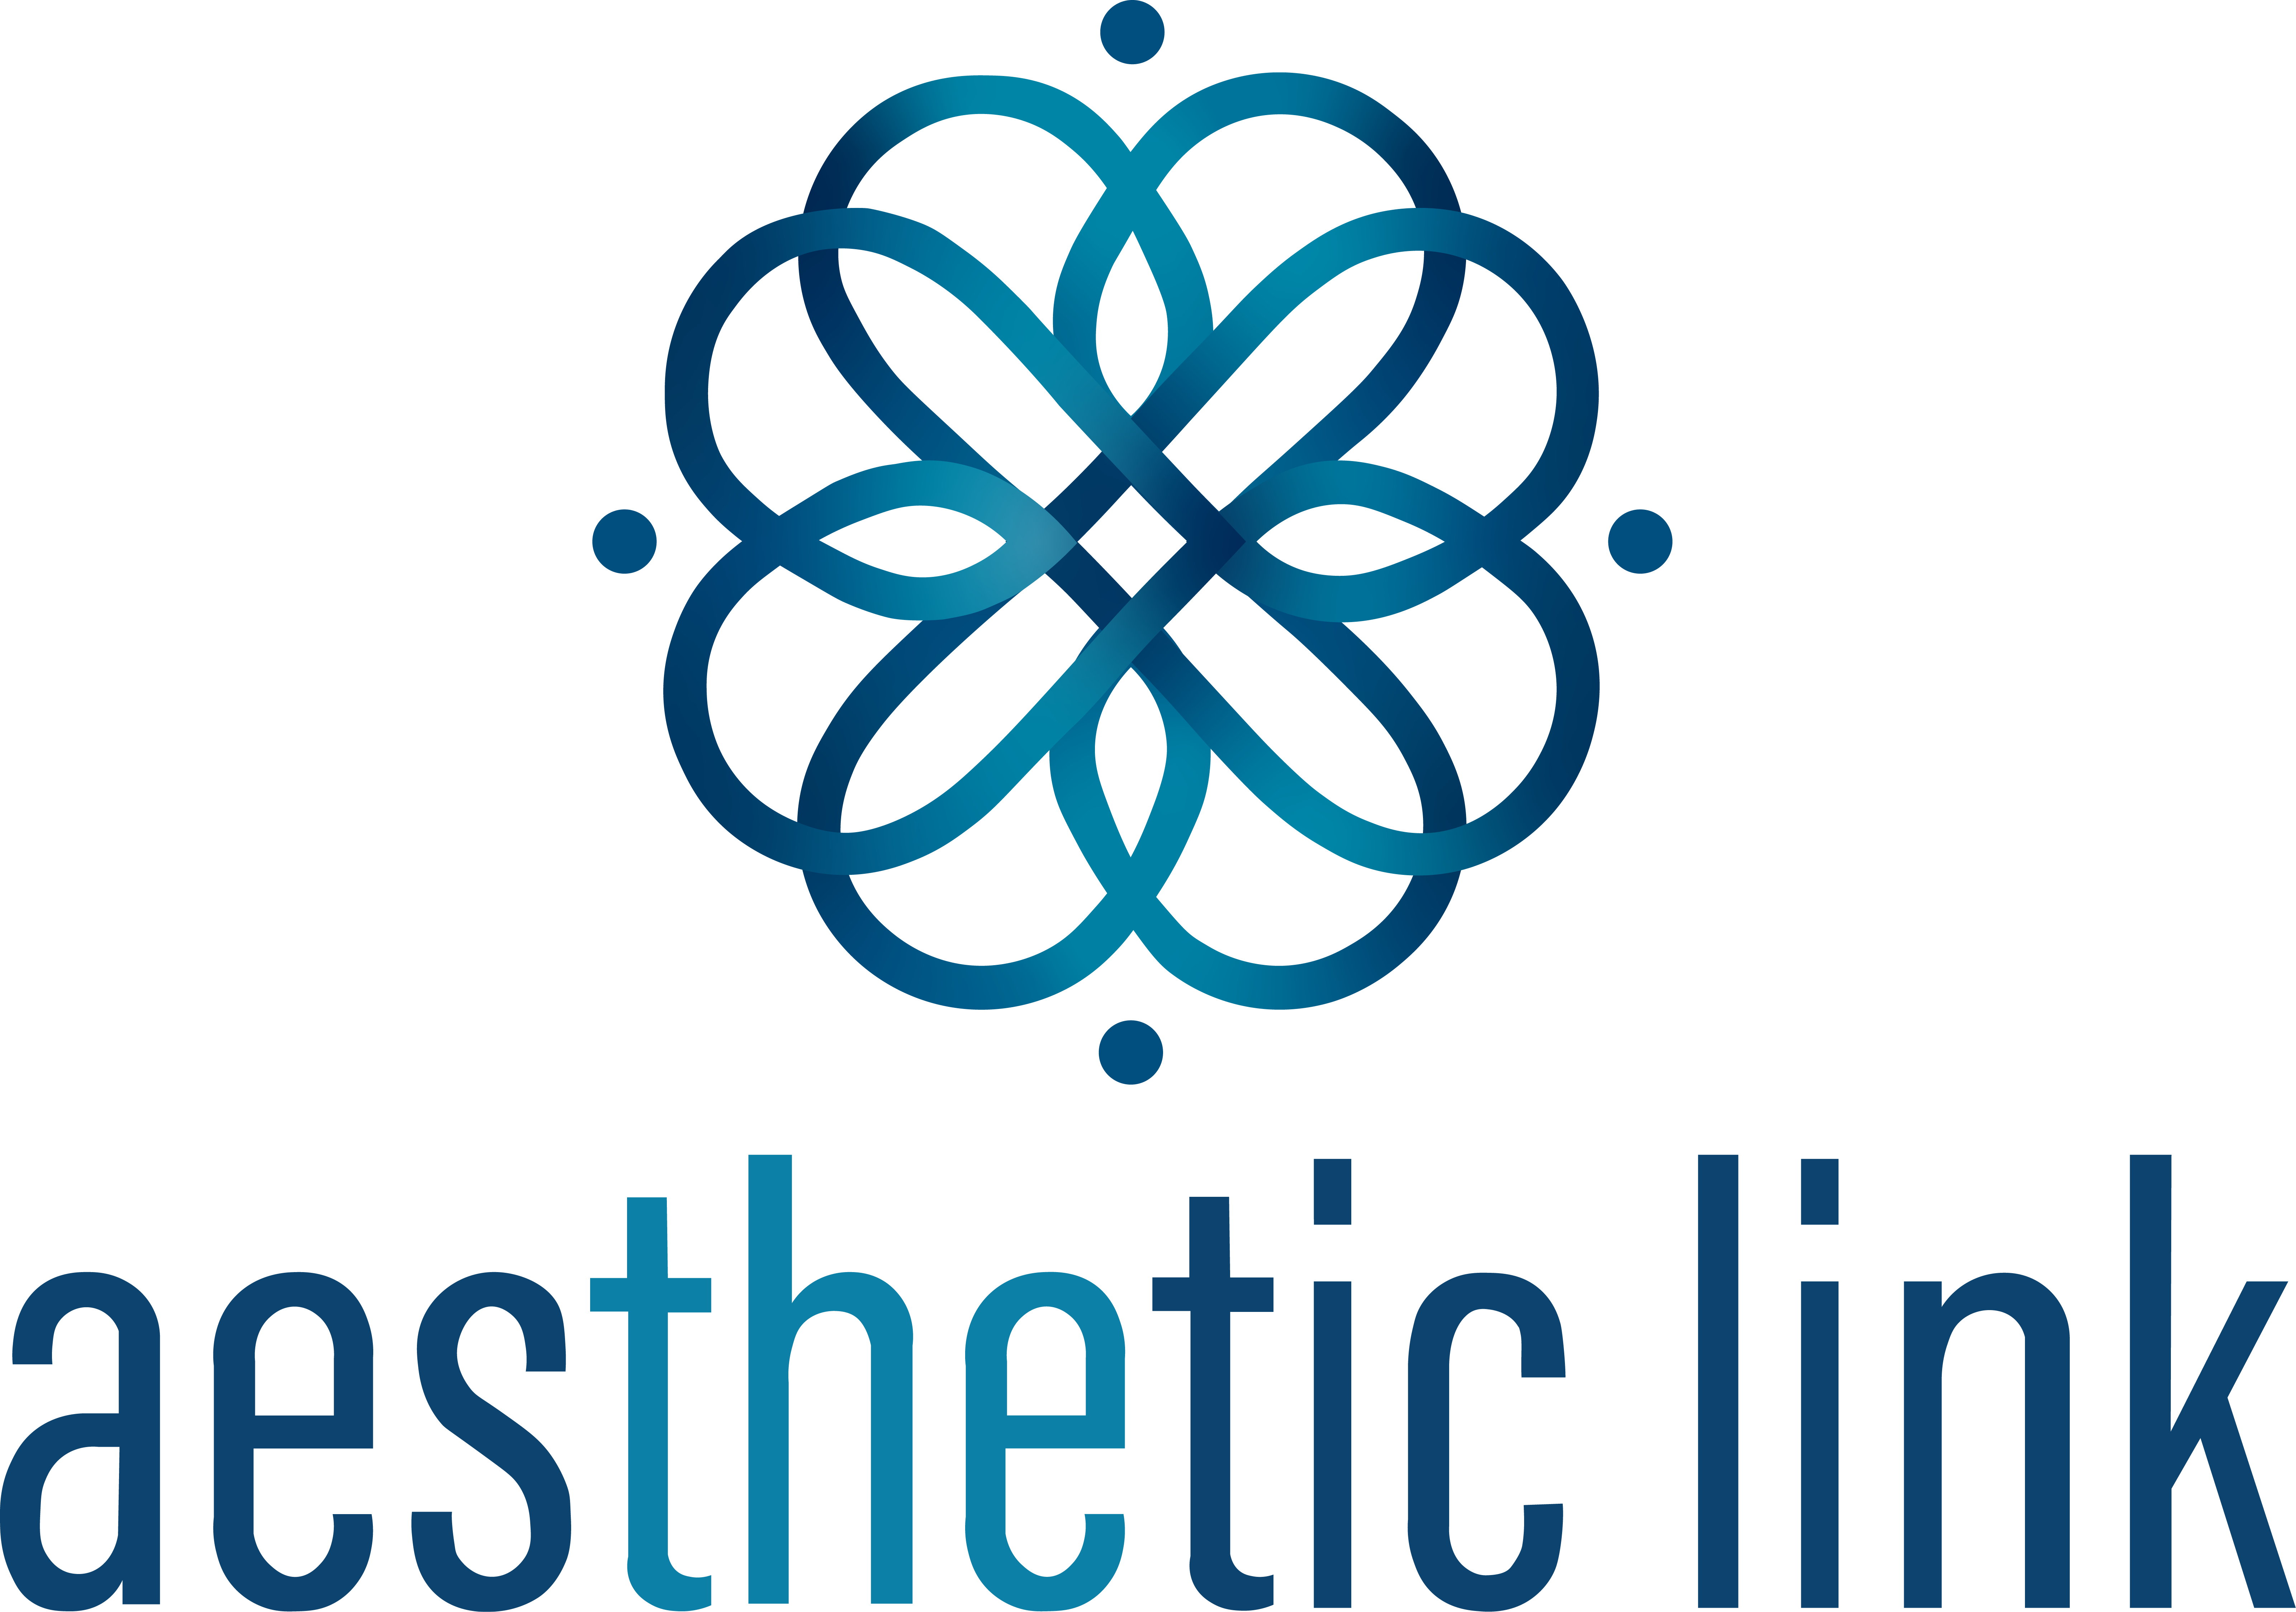 The Aesthetic Link logo in Apollo Beach FL